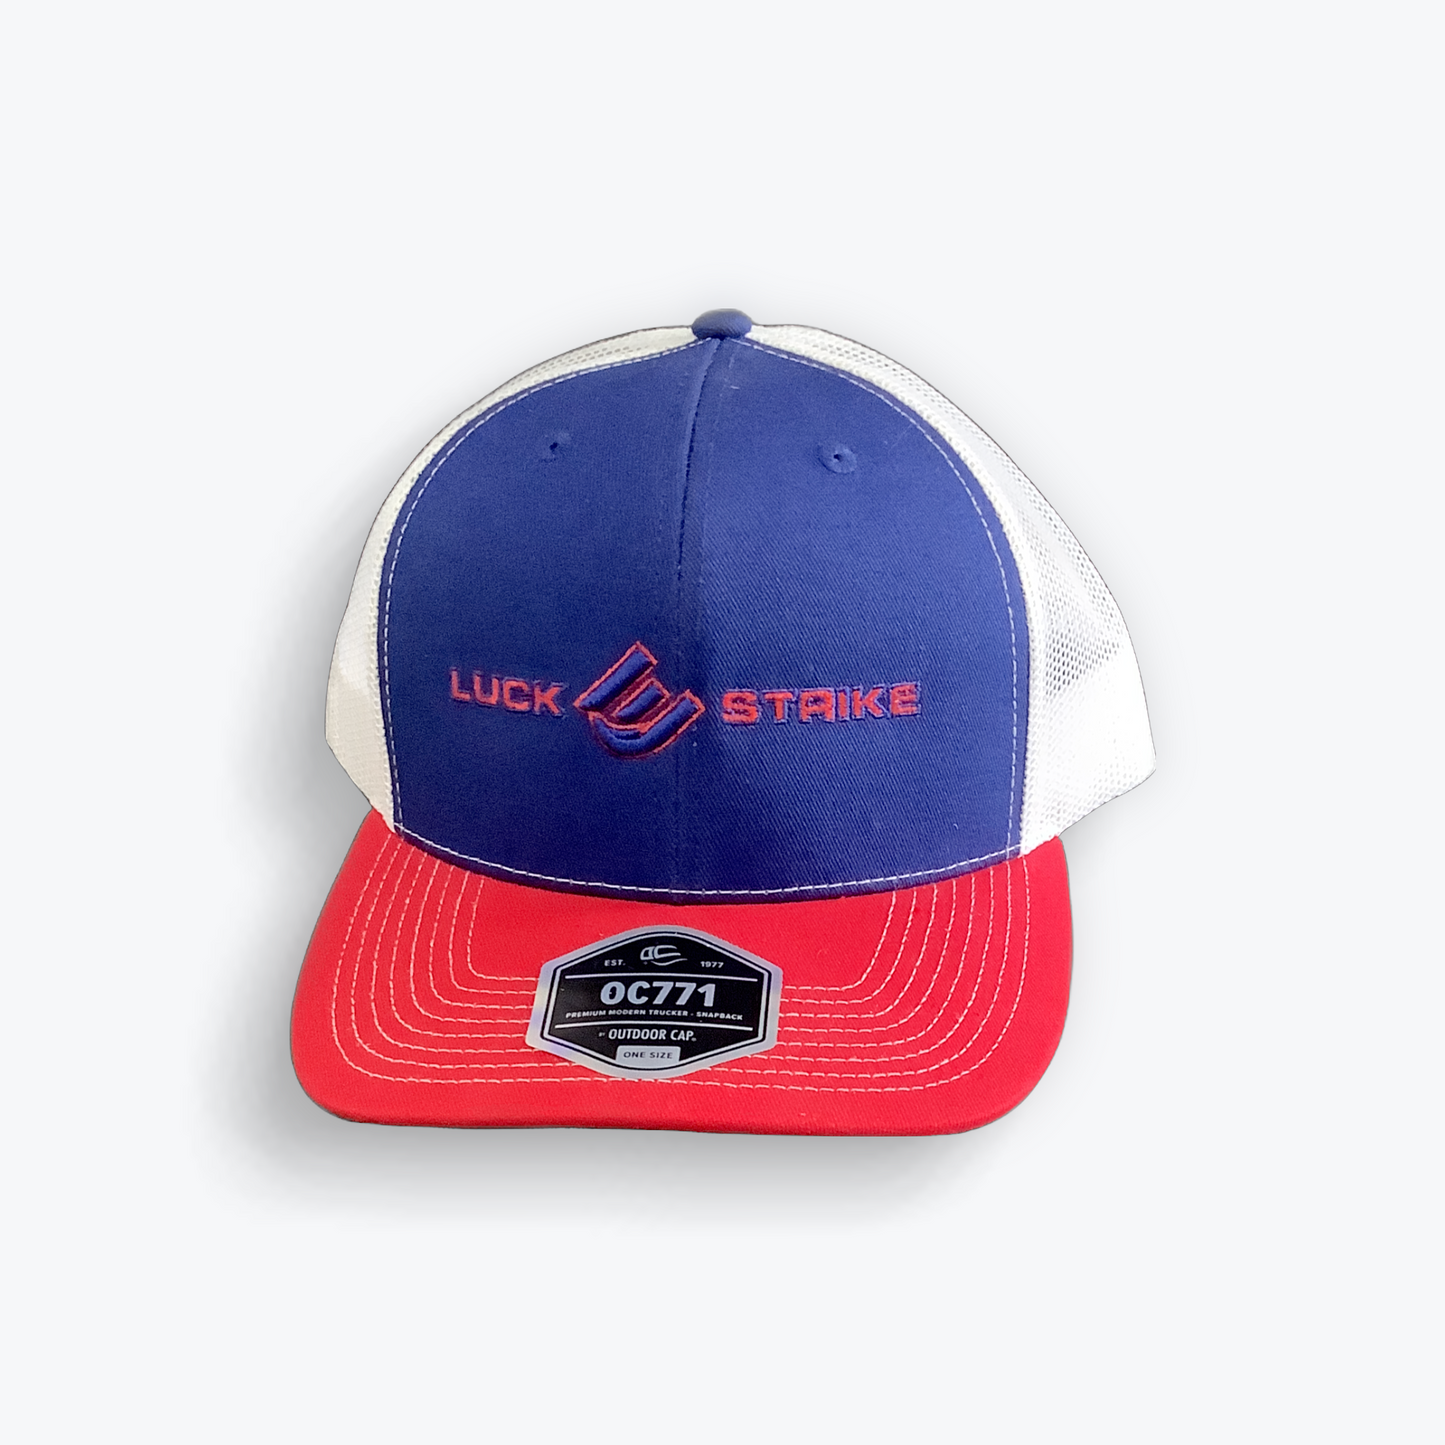 Blue Luck-E-Strike Hat